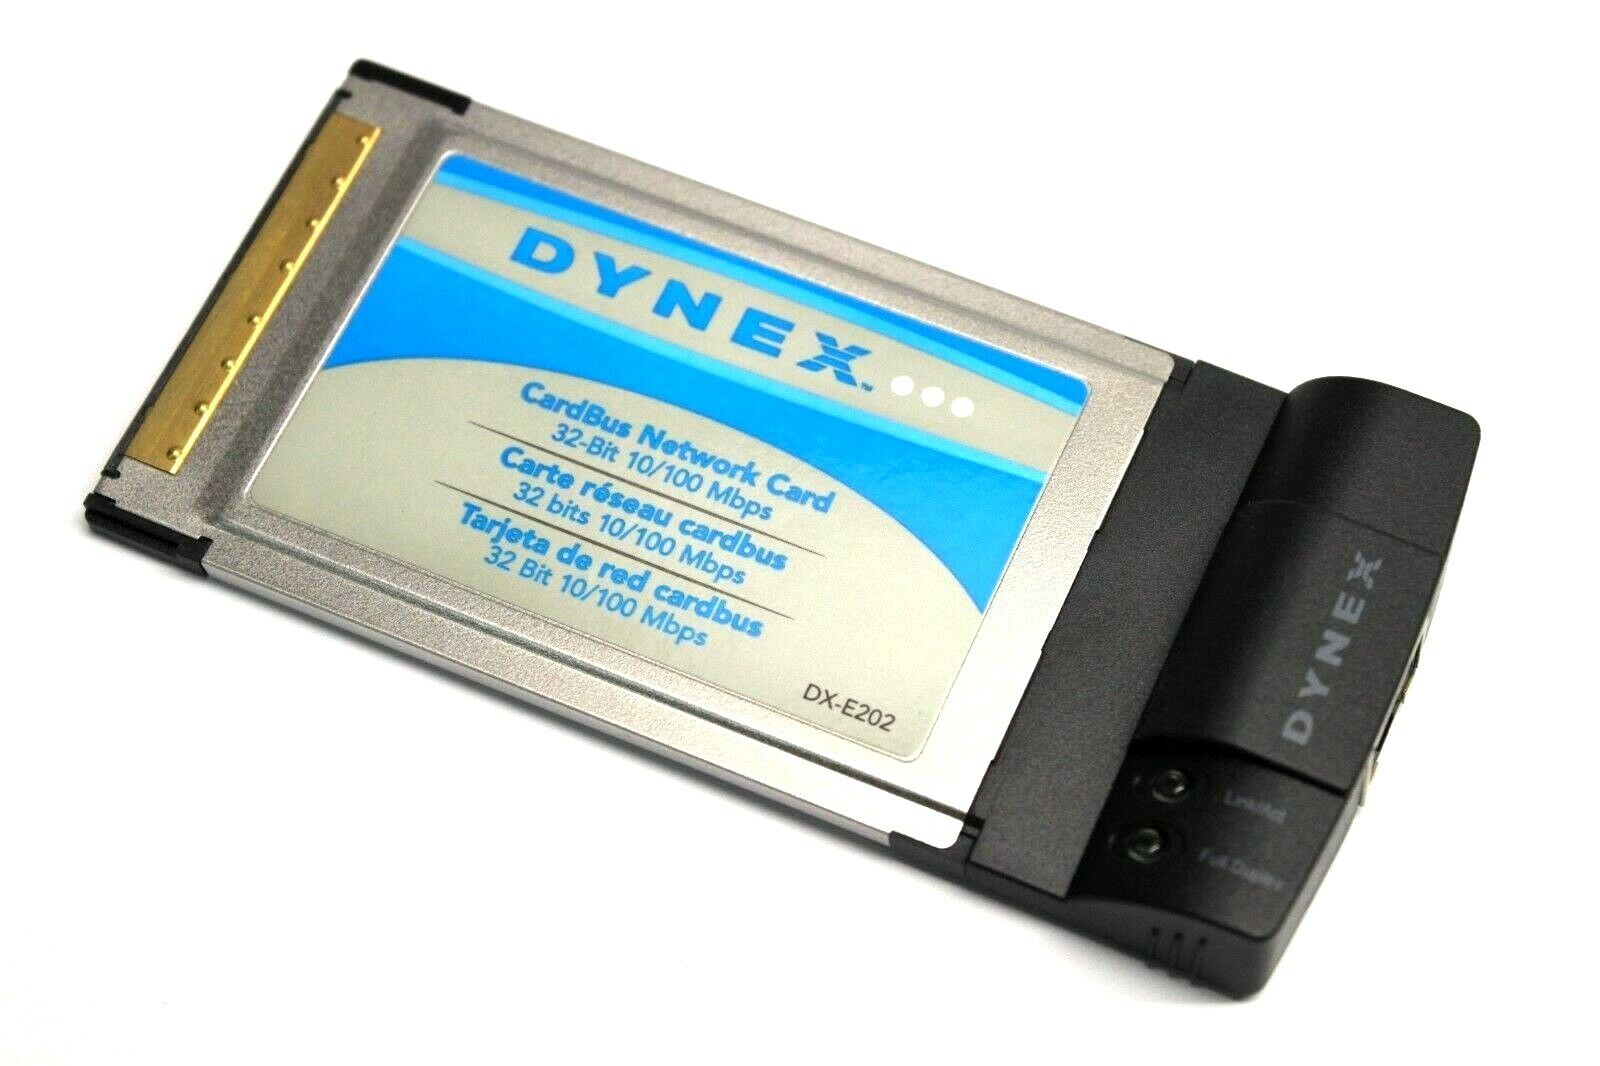 Dynex DX-E202 CardBus Network Card 32-Bit 10/100 Mbps PCMCIA for Laptop Computer